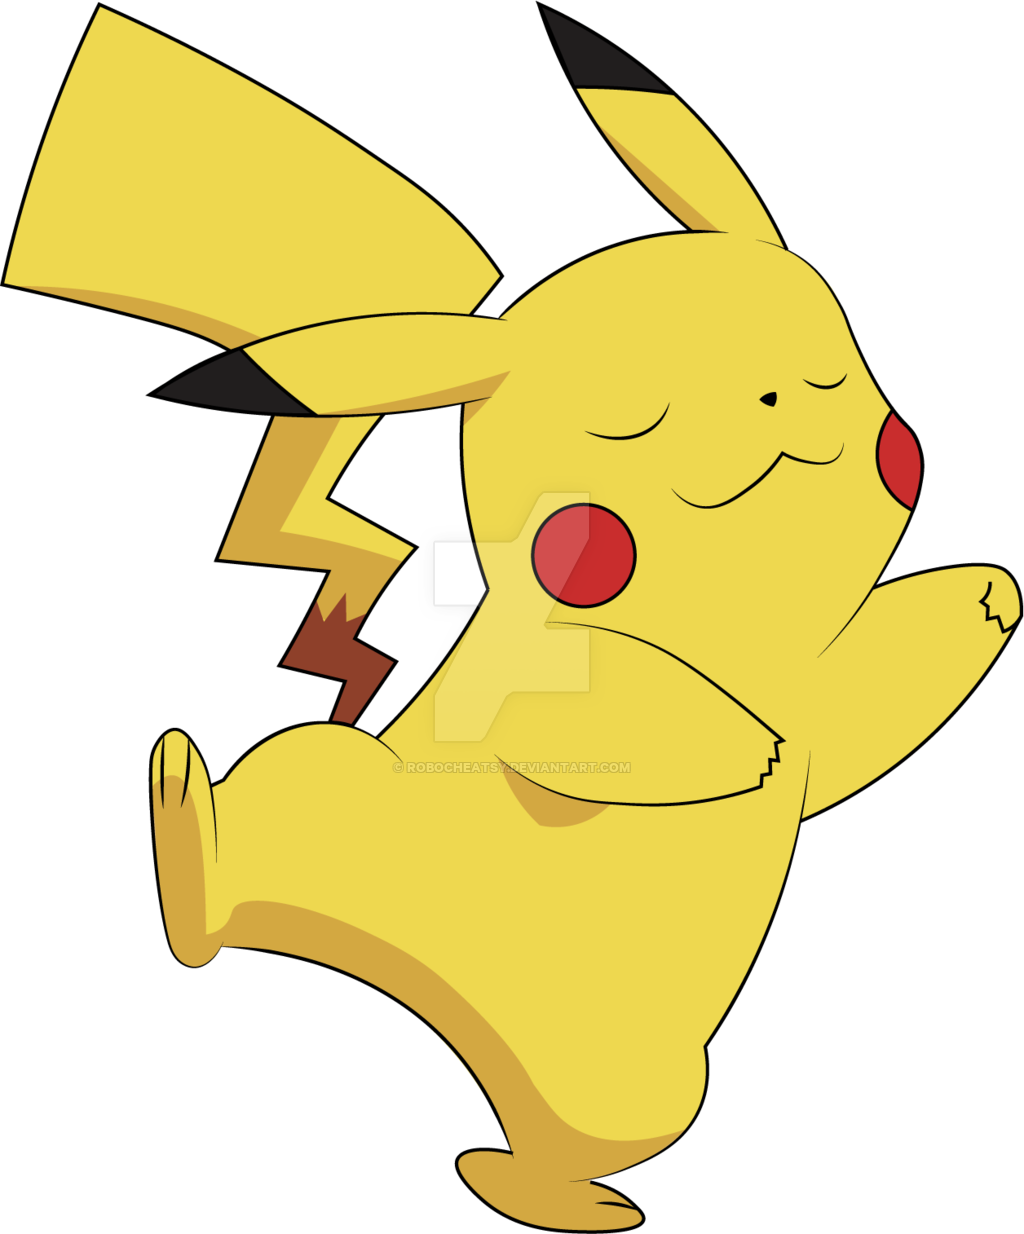 Pikachu Vector By Robocheatsy - Vector Image Of Pikachu (1024x1234)